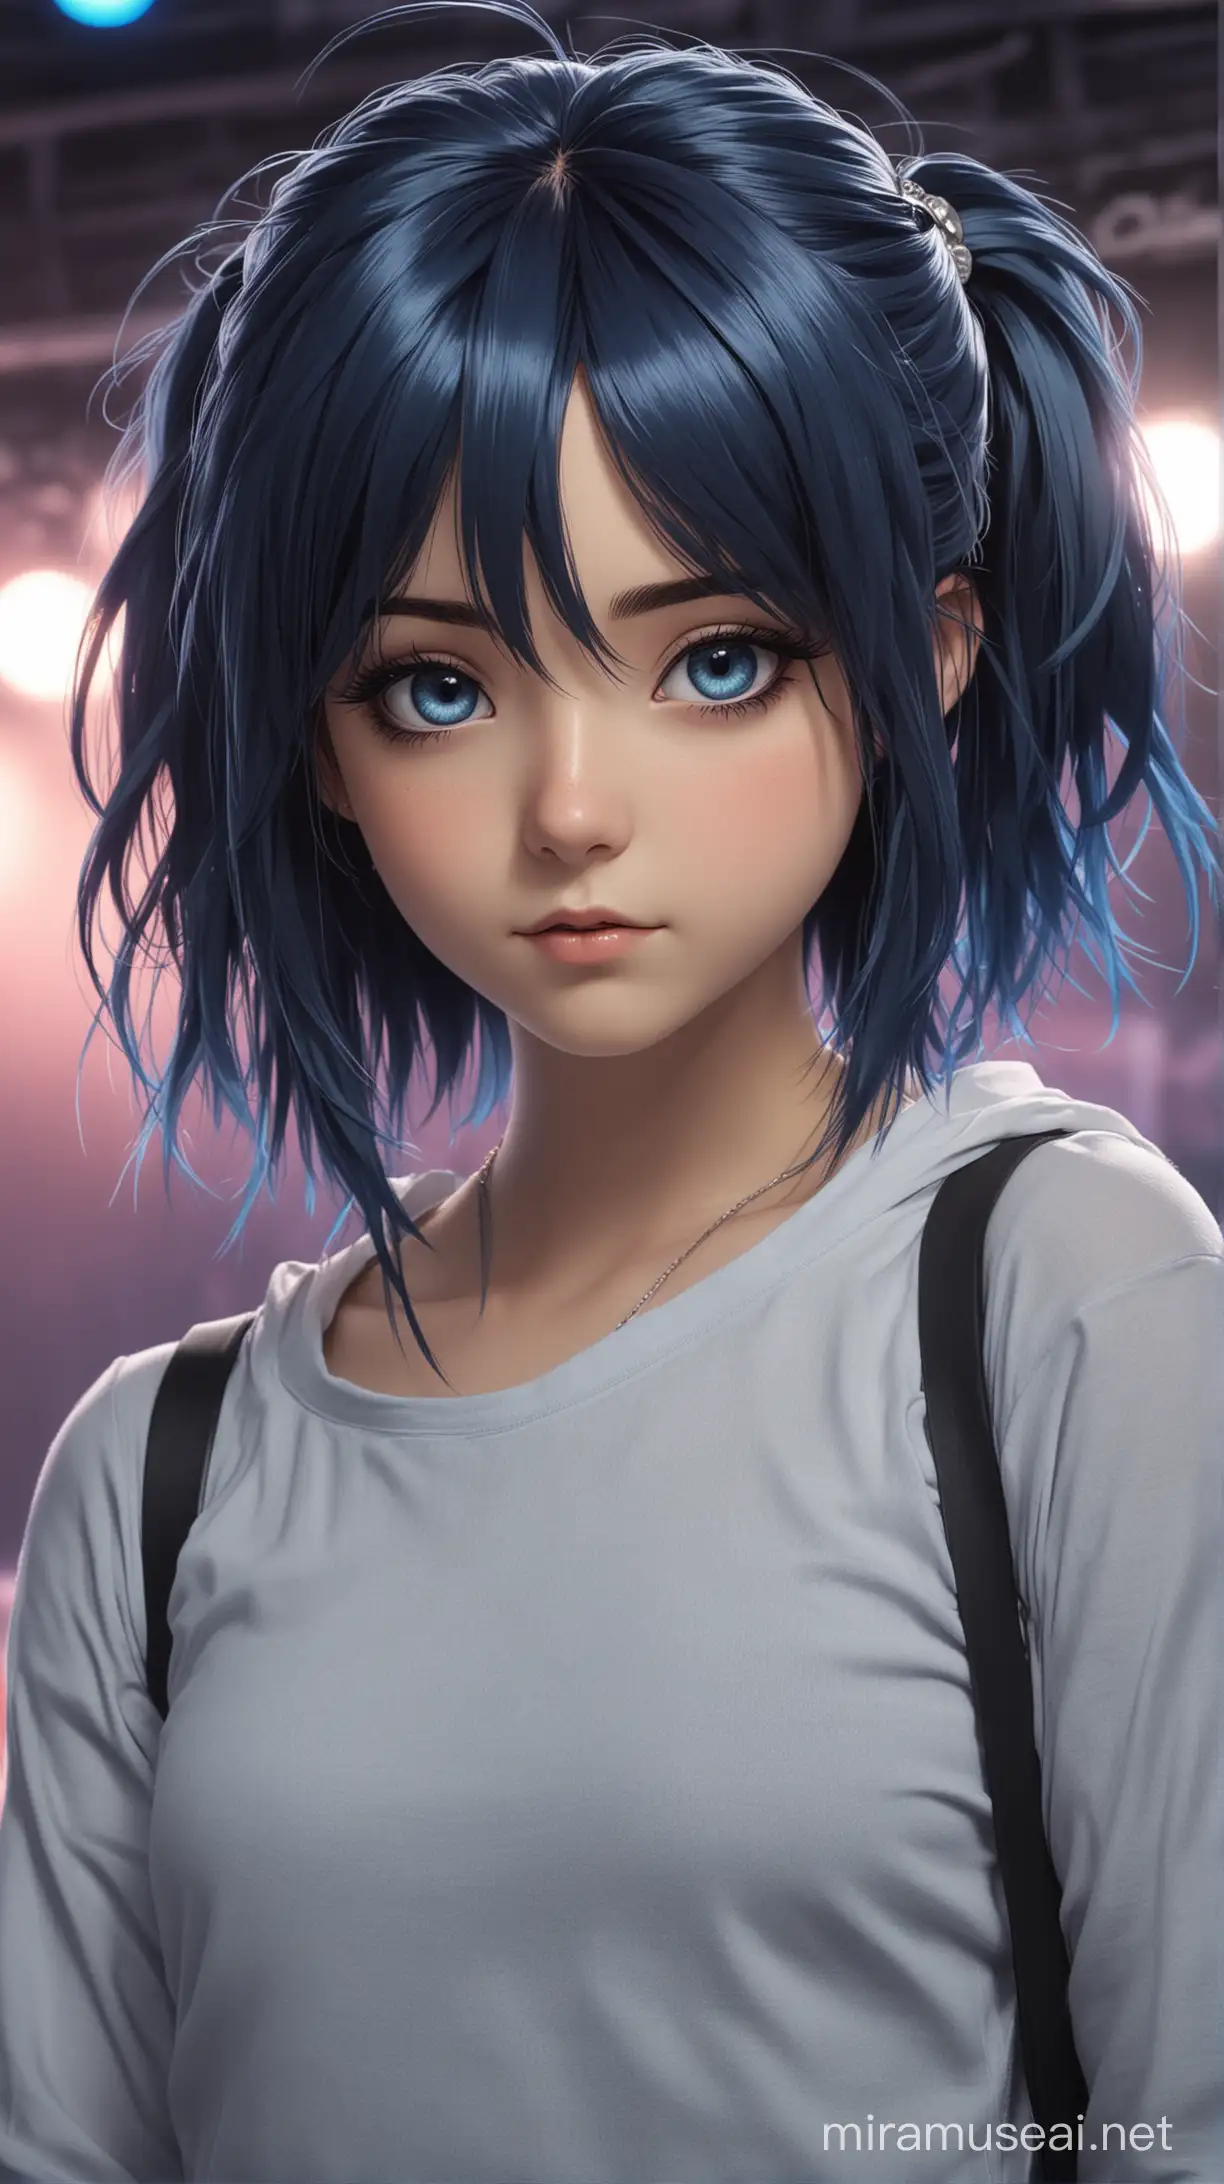 Modern Retro Rock Stage Anime Girl with Dark Blue Hair